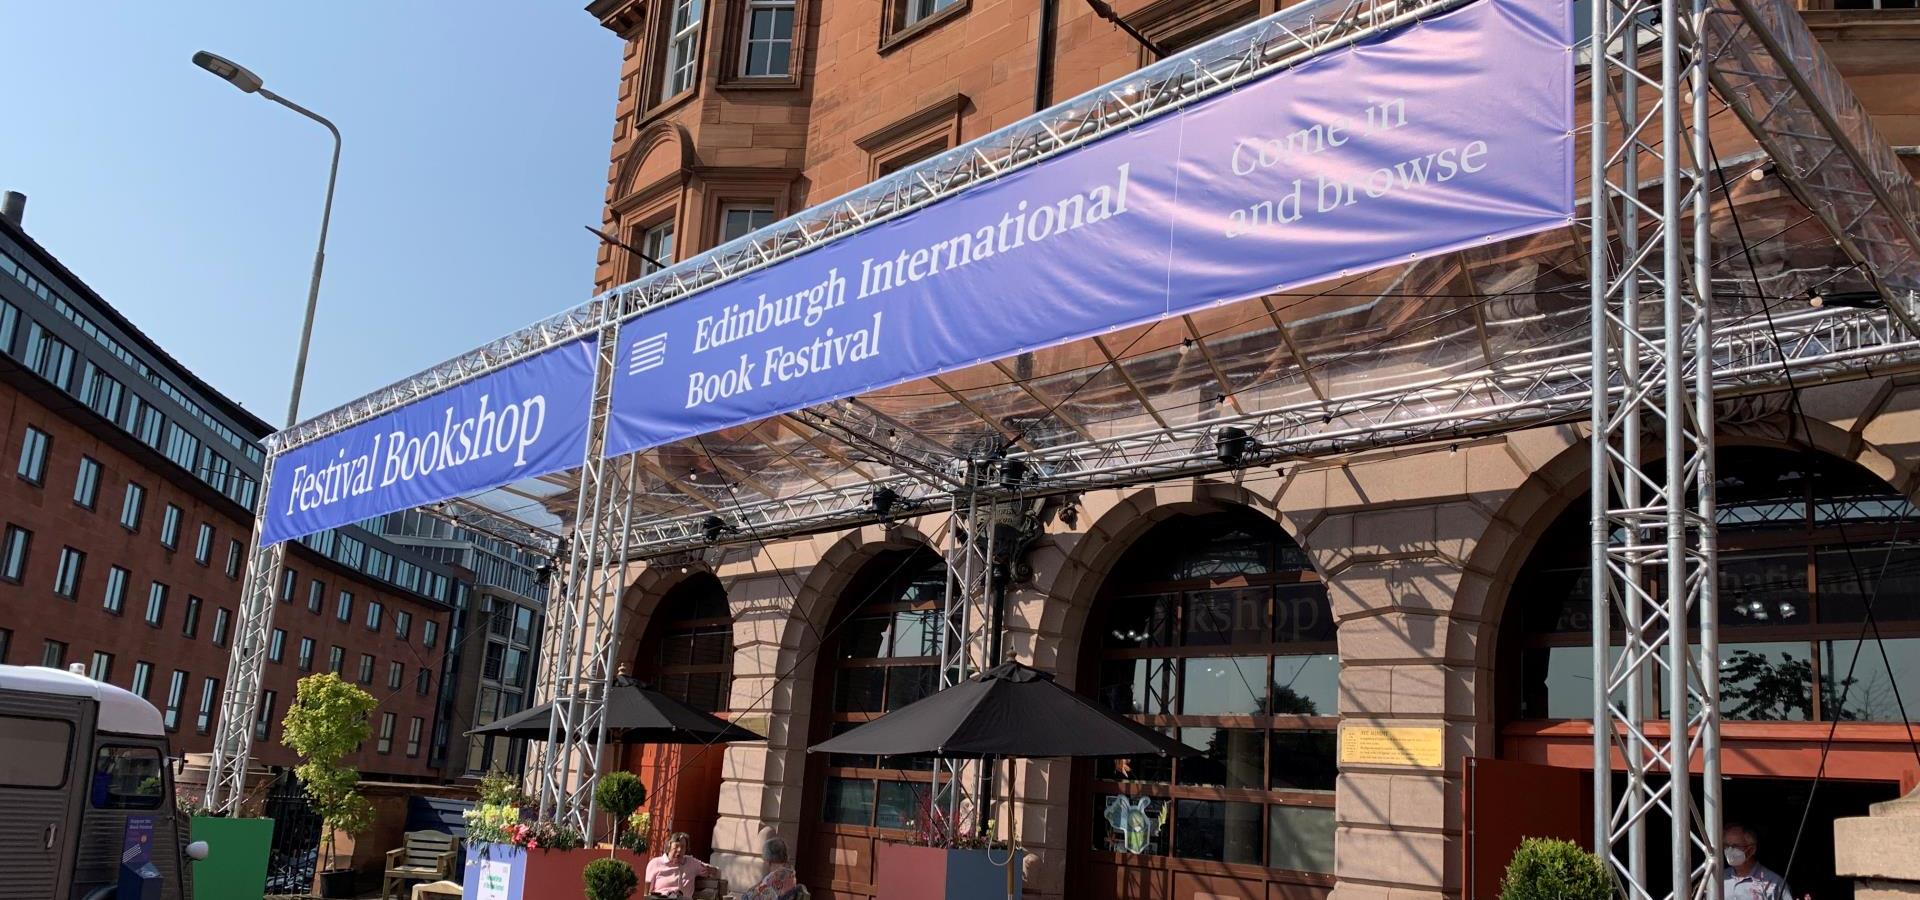 Exterior of the Edinburgh International Book Festival